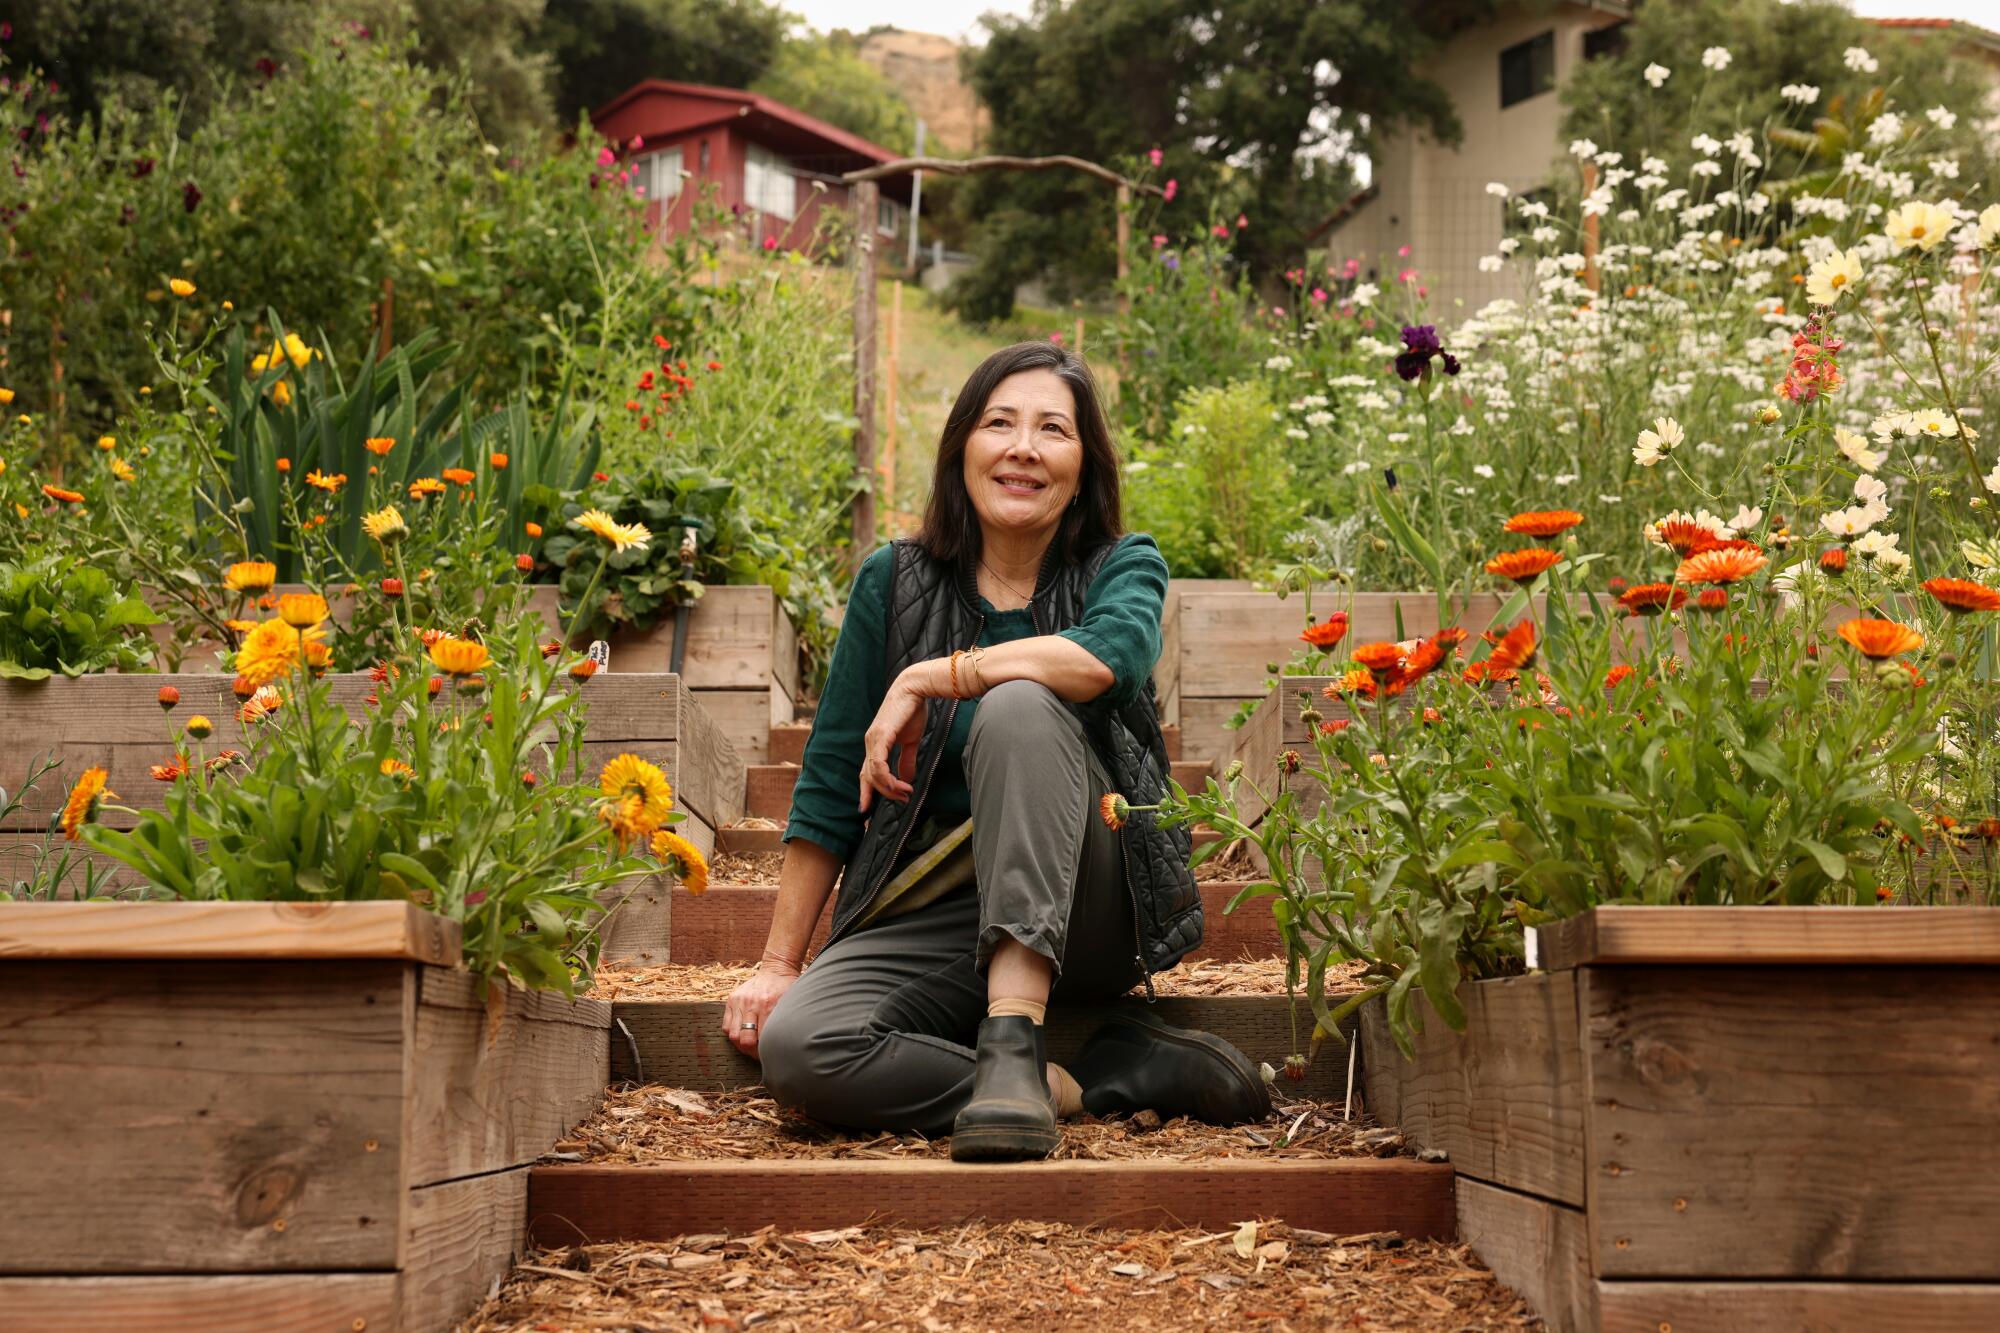 L.A. landscape designer Kathleen Ferguson sits surrounded by flowers in wooden planter boxes